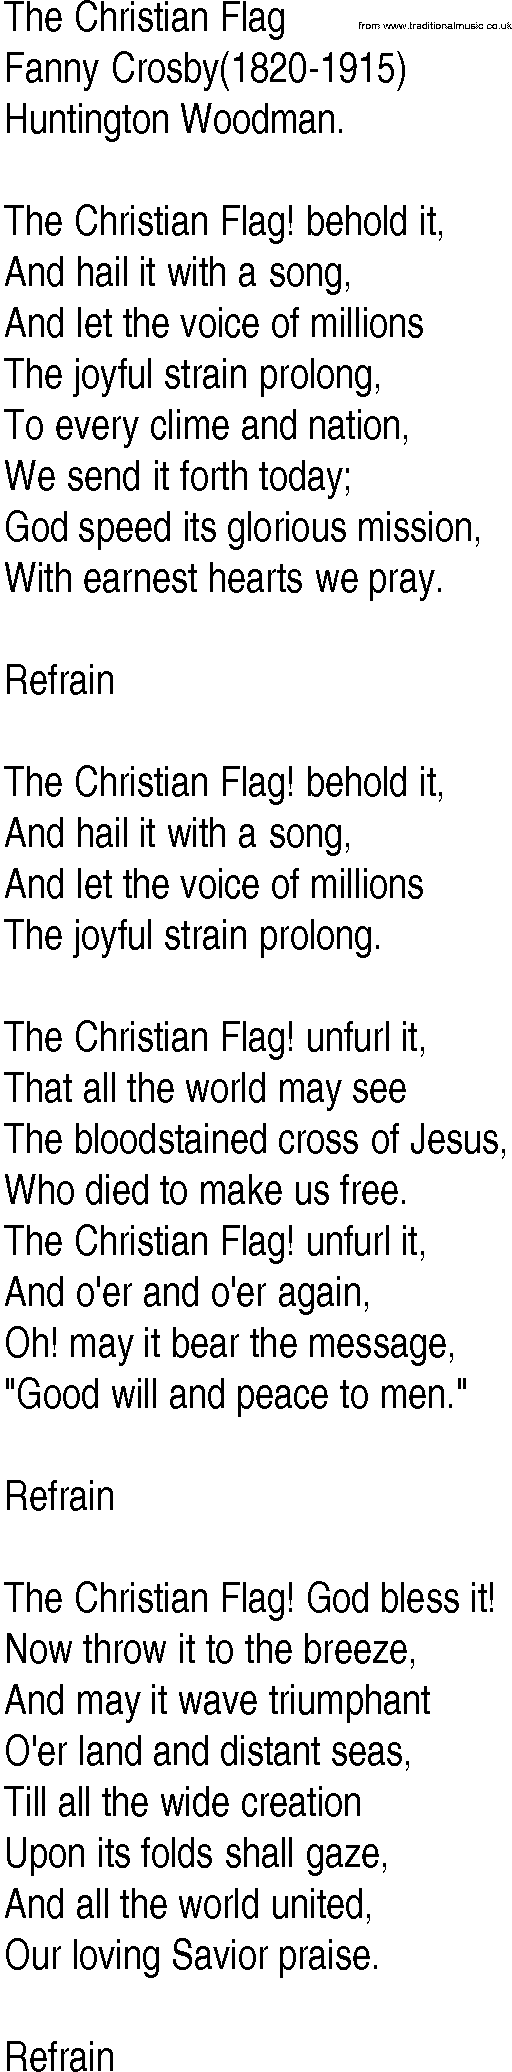 Hymn and Gospel Song: The Christian Flag by Fanny Crosby lyrics